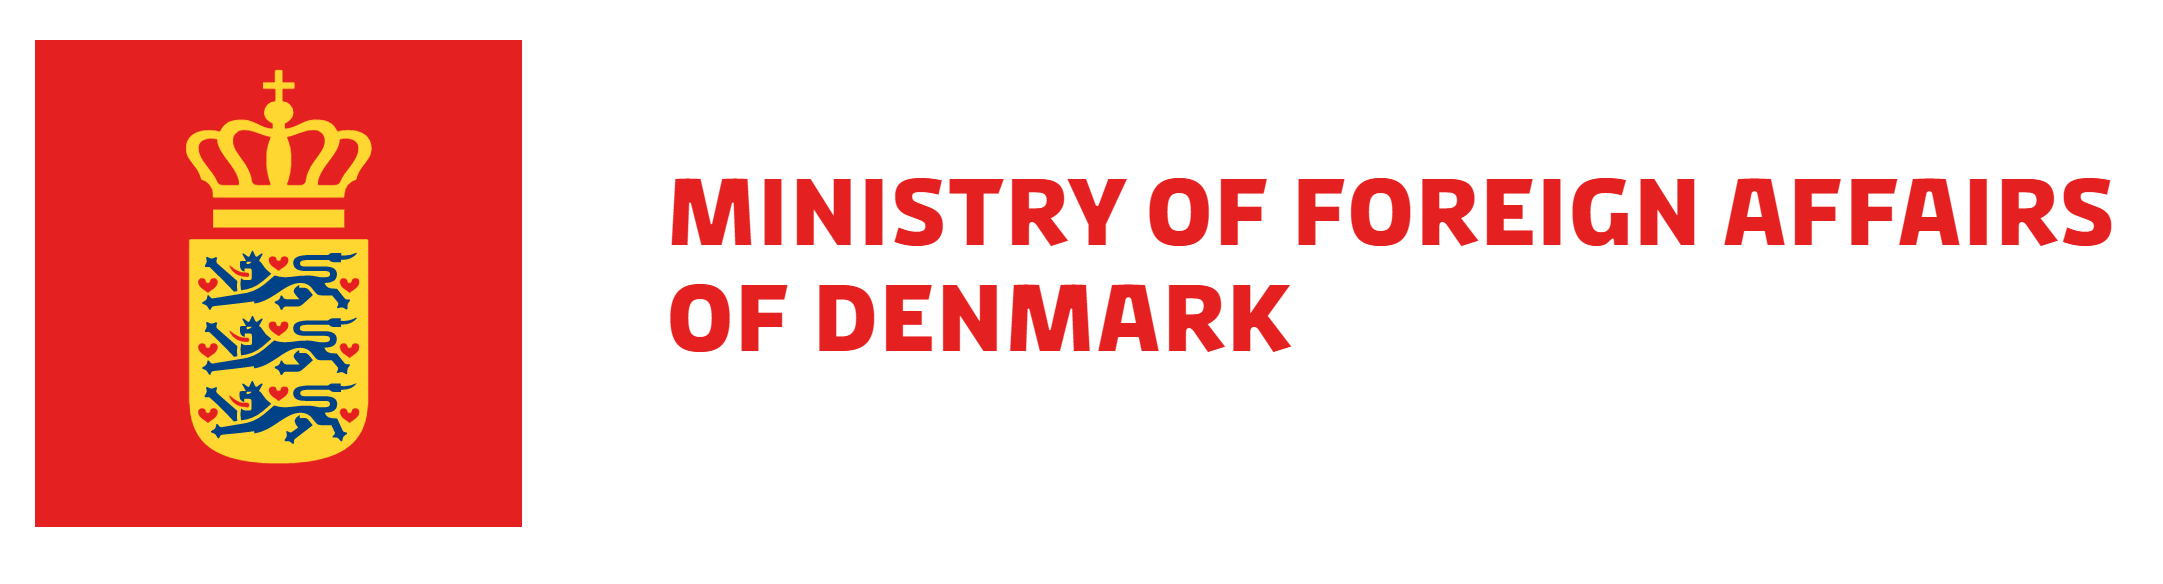 Ministry foreign affairs Denmark